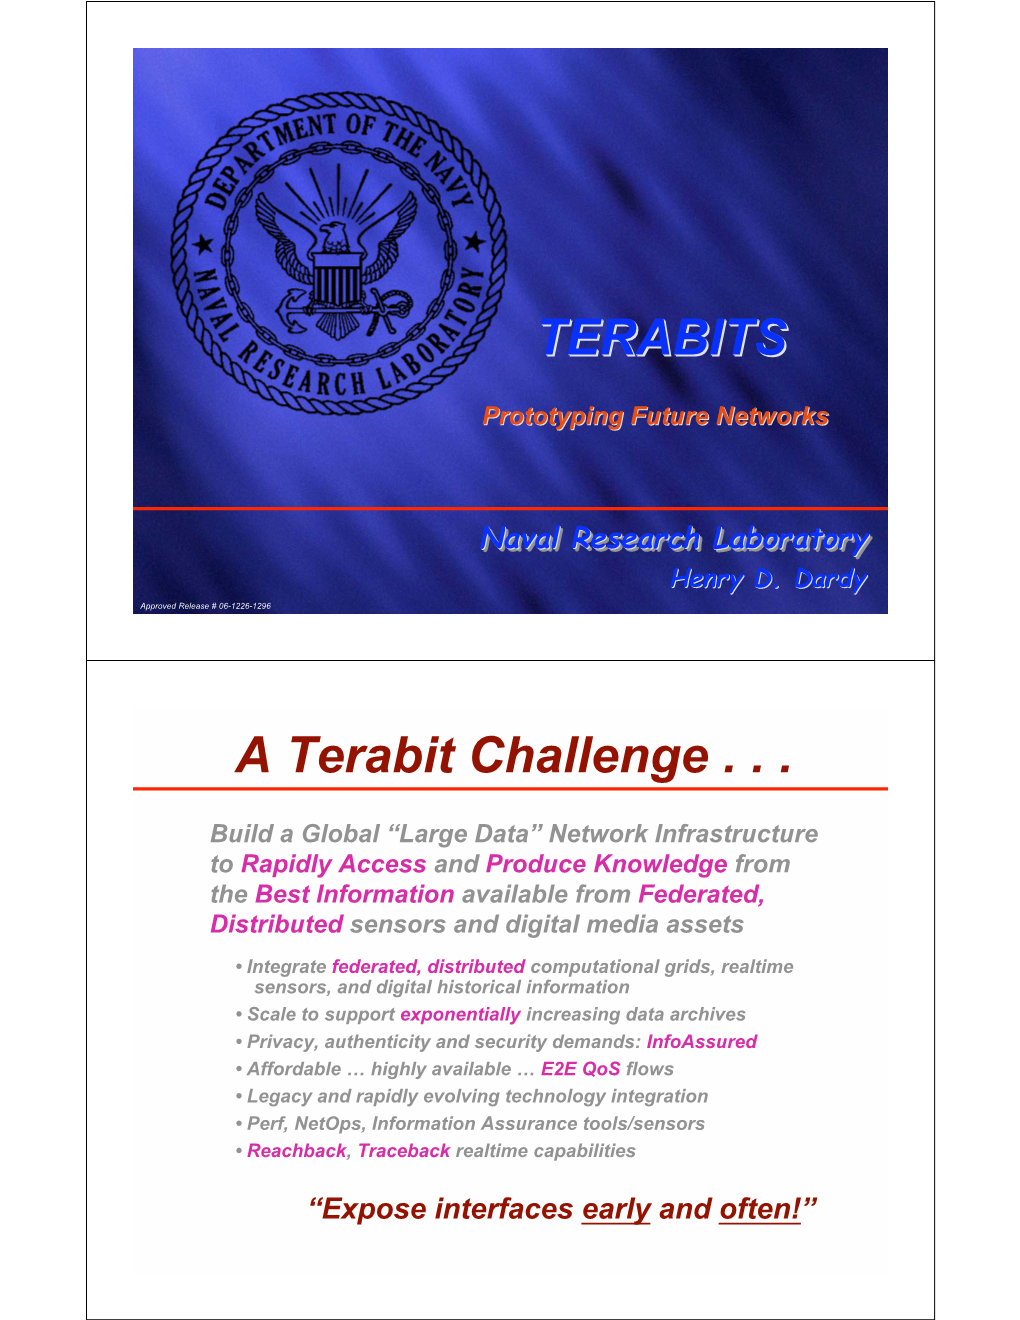 TERABITS a Terabit Challenge